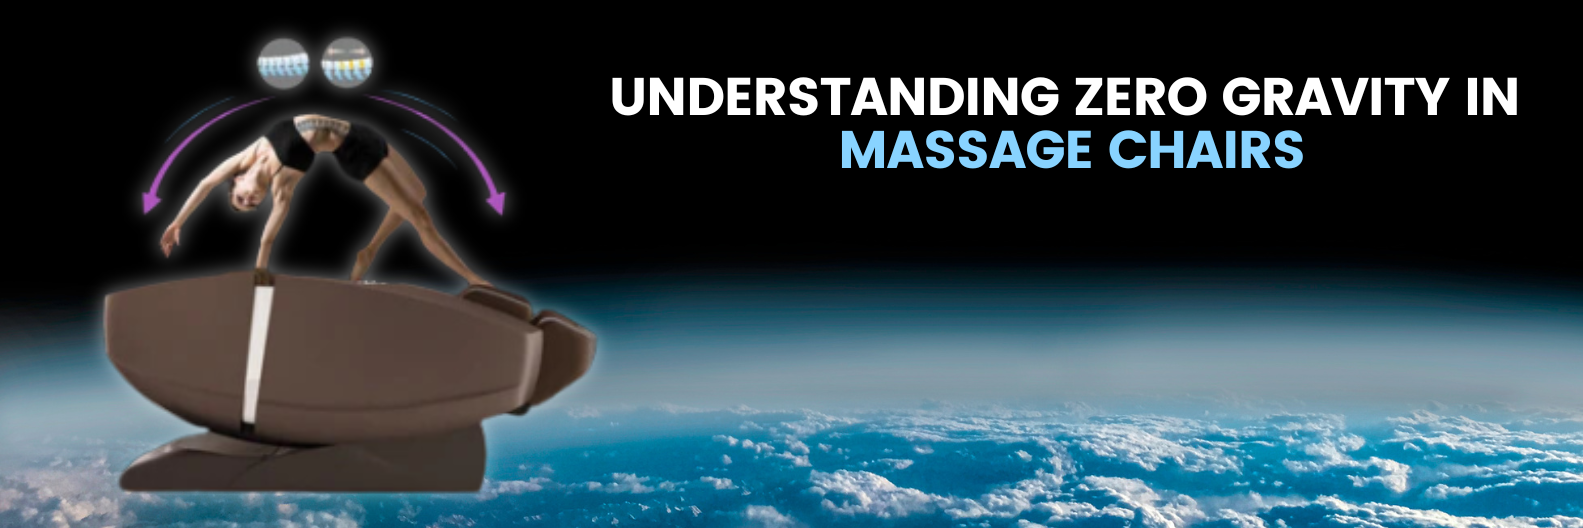 Explore cutting-edge massage chair zero gravity technology. Discover superior zero gravity massage chair characteristics and benefits in easy, straightforward English.